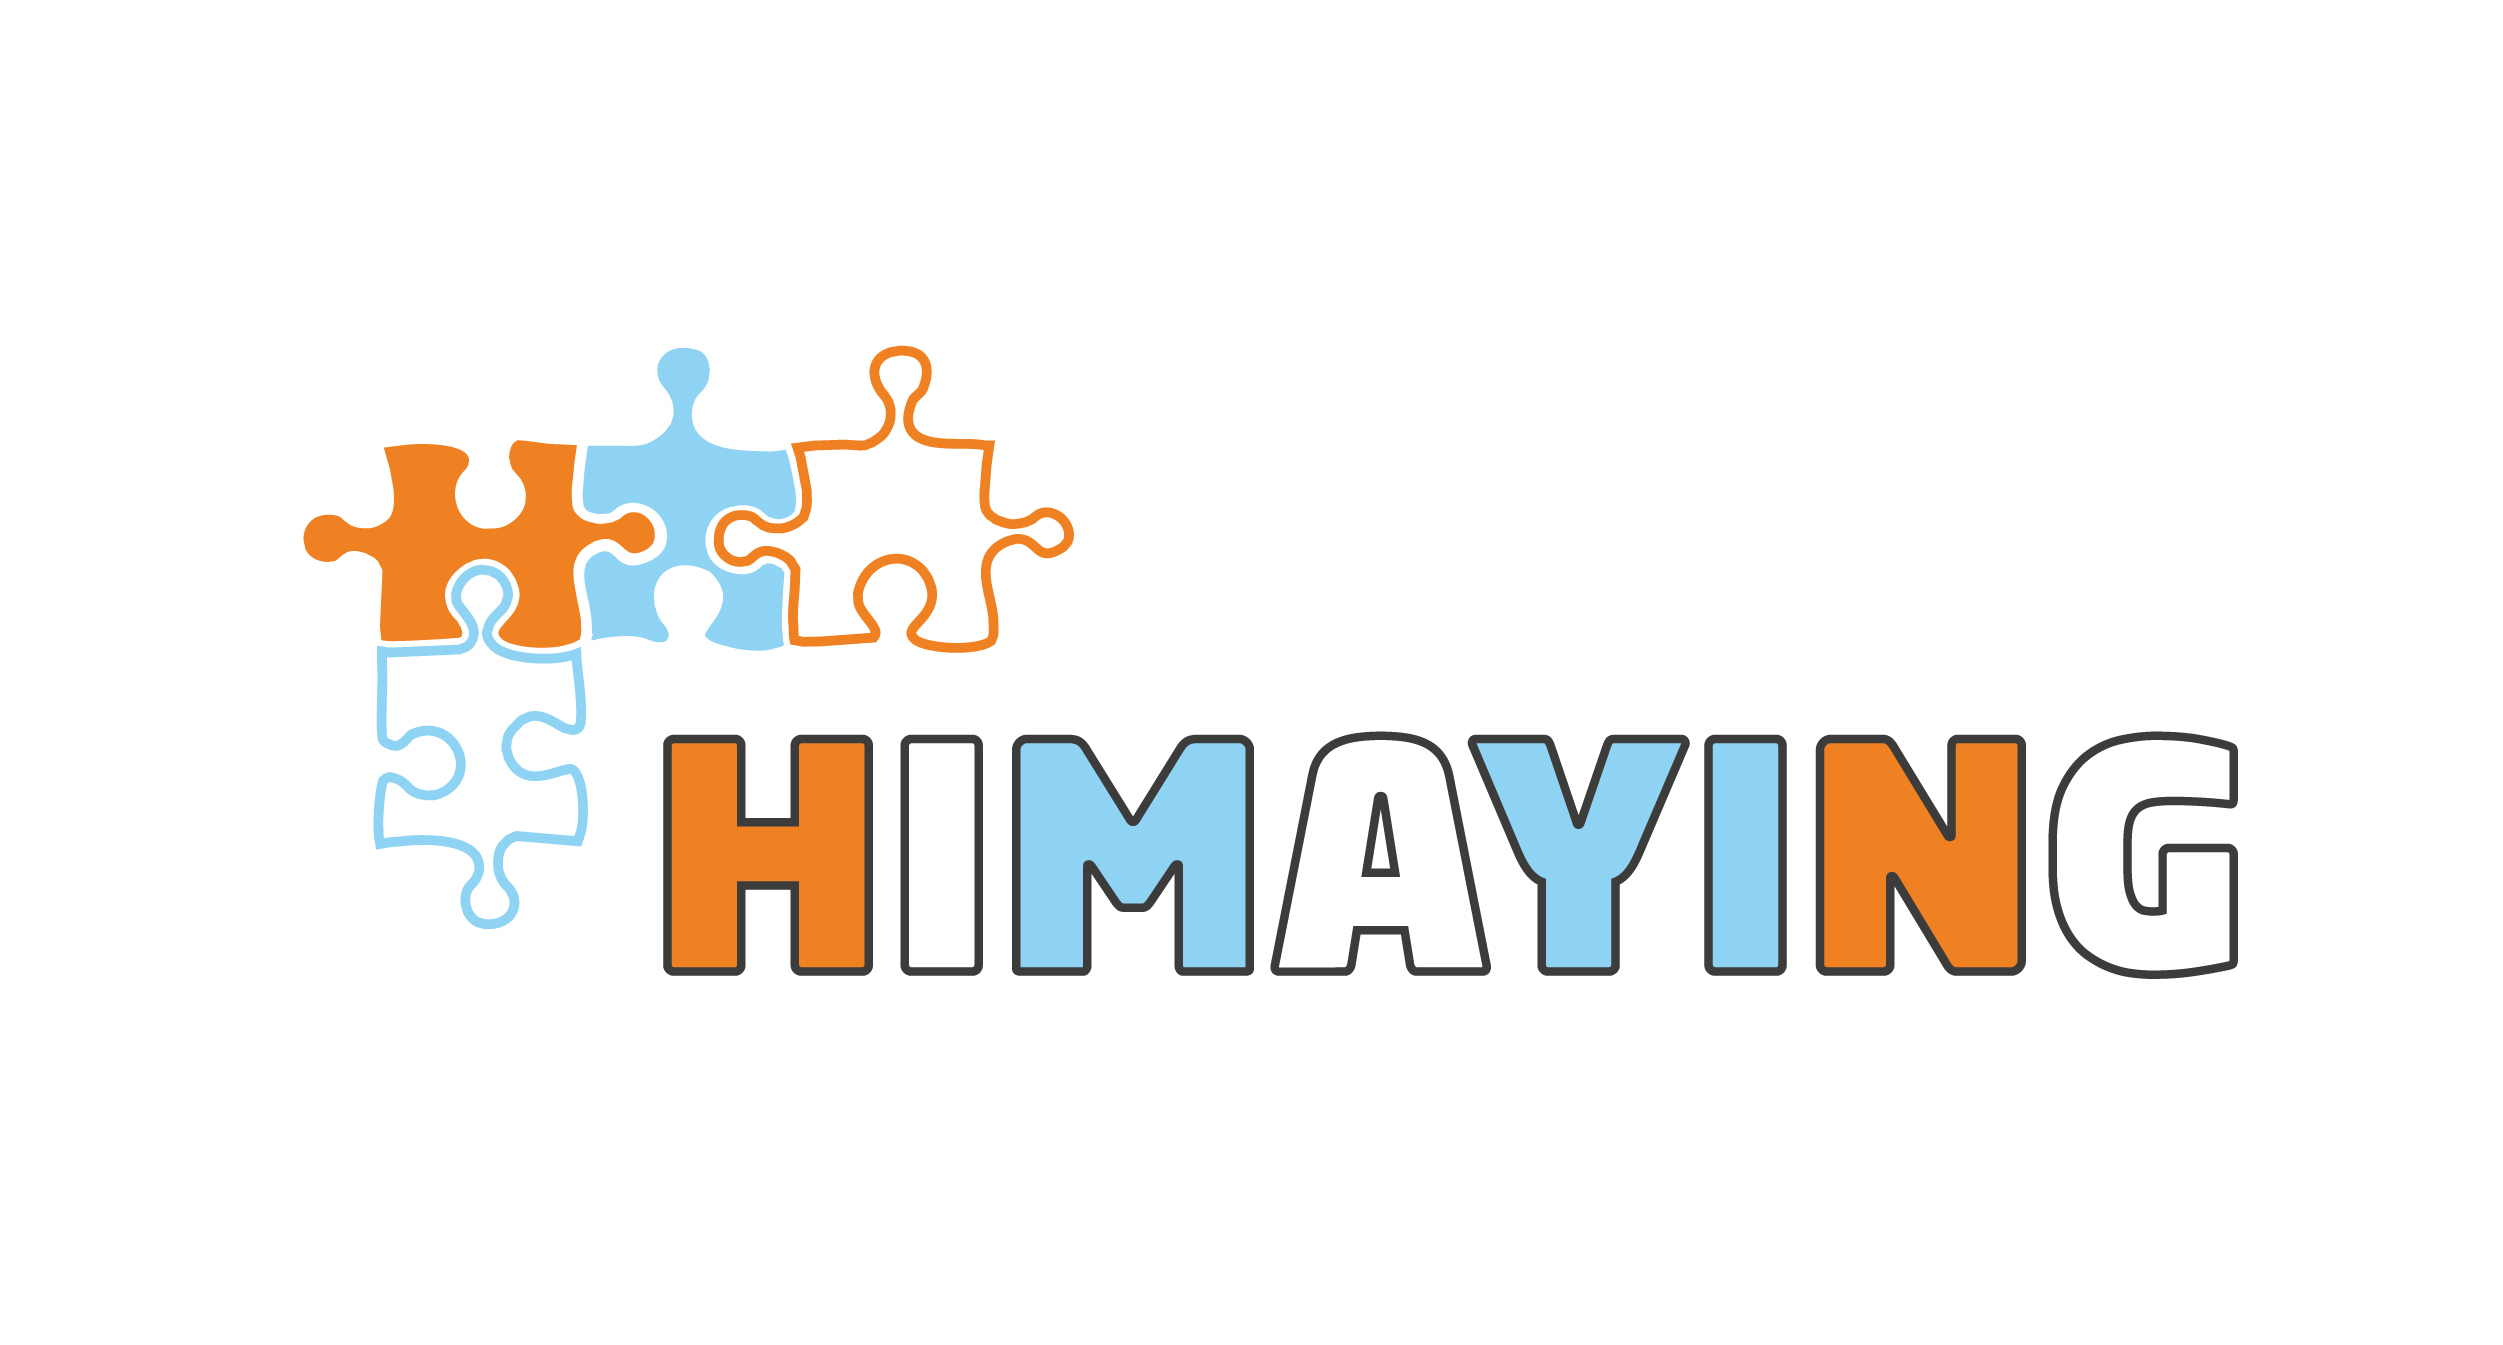 HIMAYING - Mauricio Hidalgo Mayoral